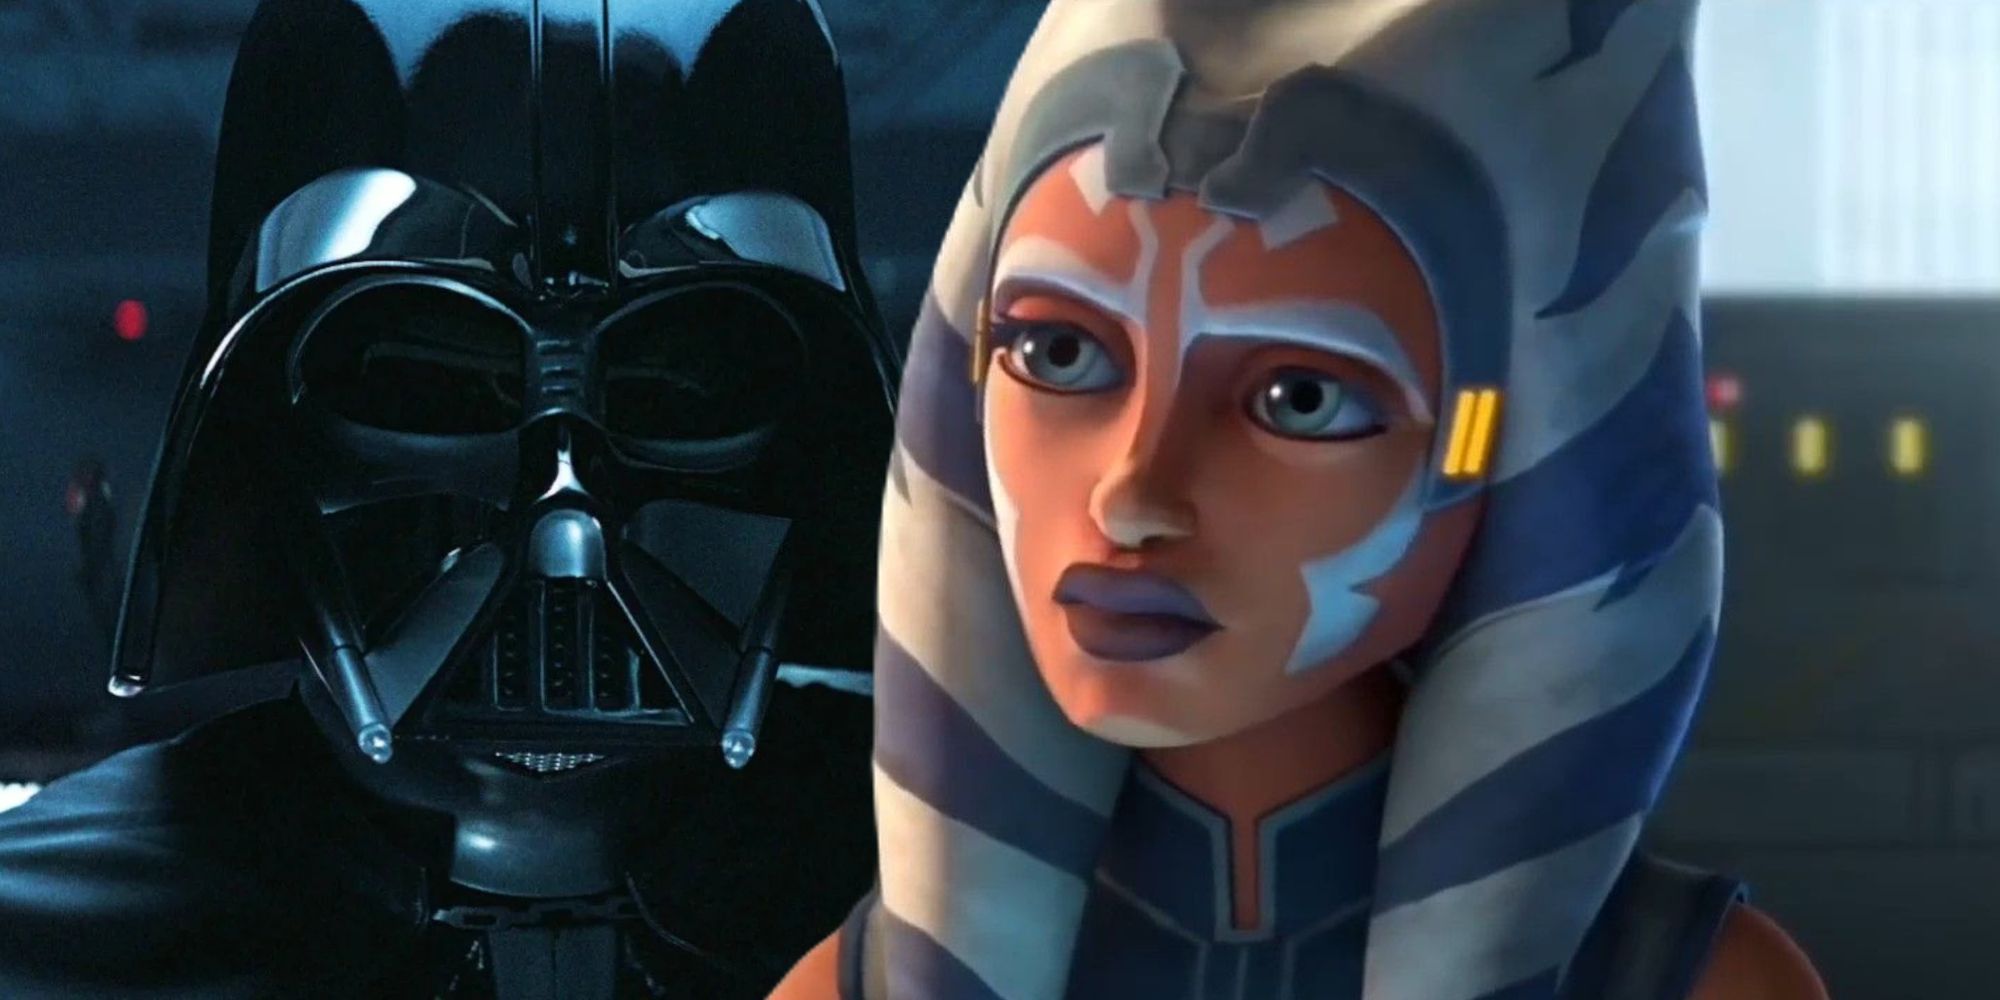 Darth Vader in Obi-Wan Kenobi and Ahsoka Tano.